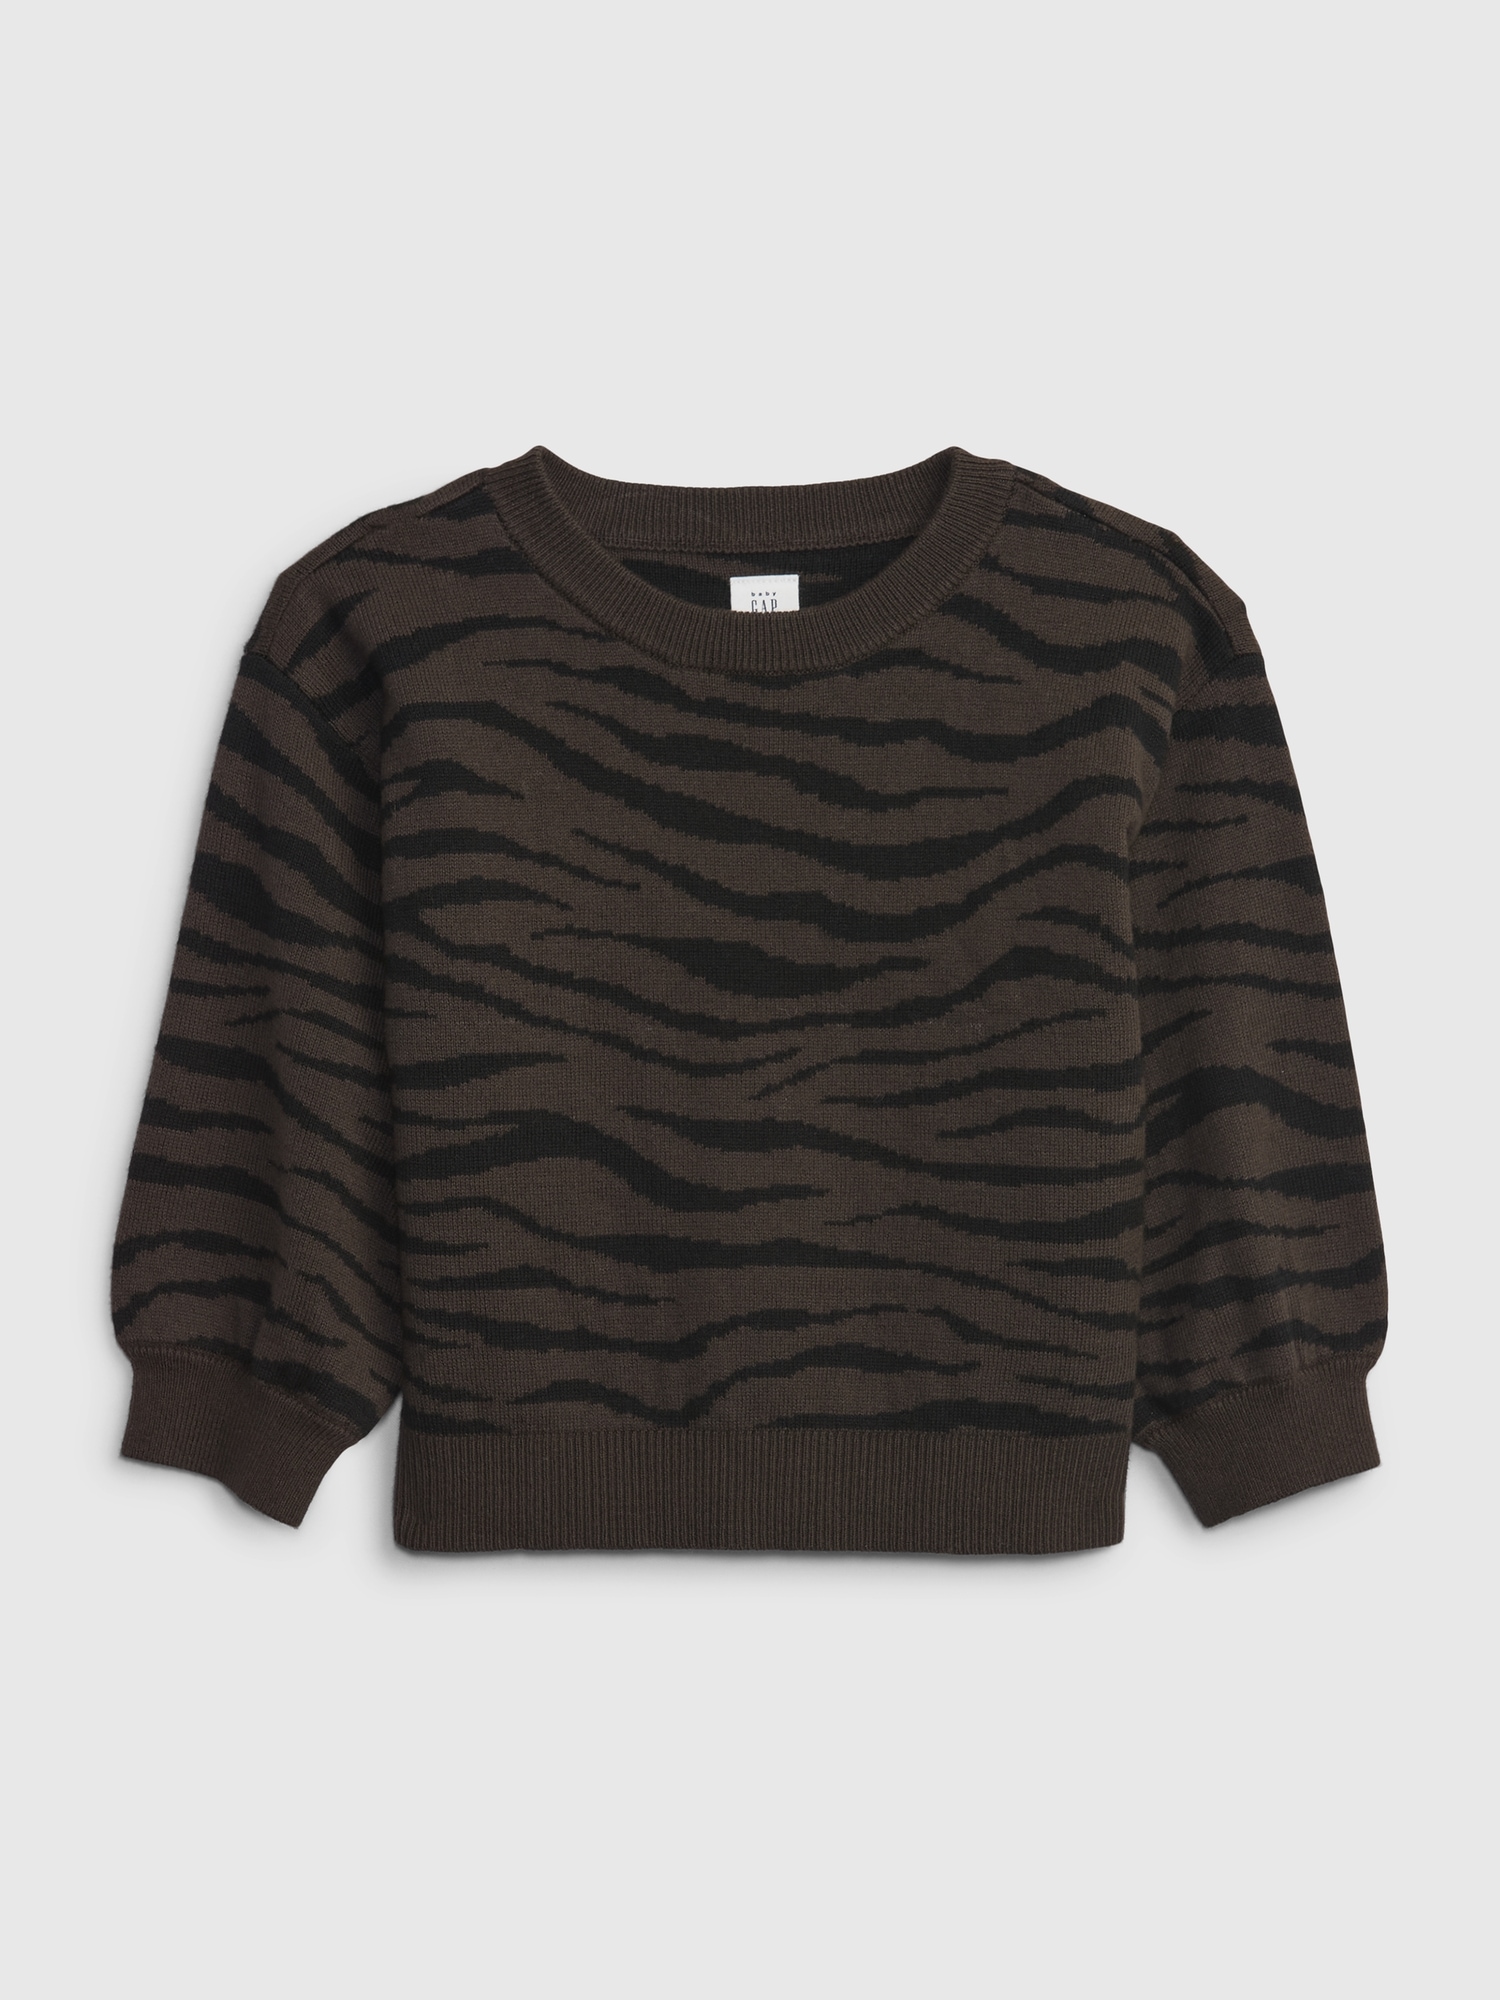 Gap Babies' Toddler Printed Sweater In Zebra Deep Chocolate Brown